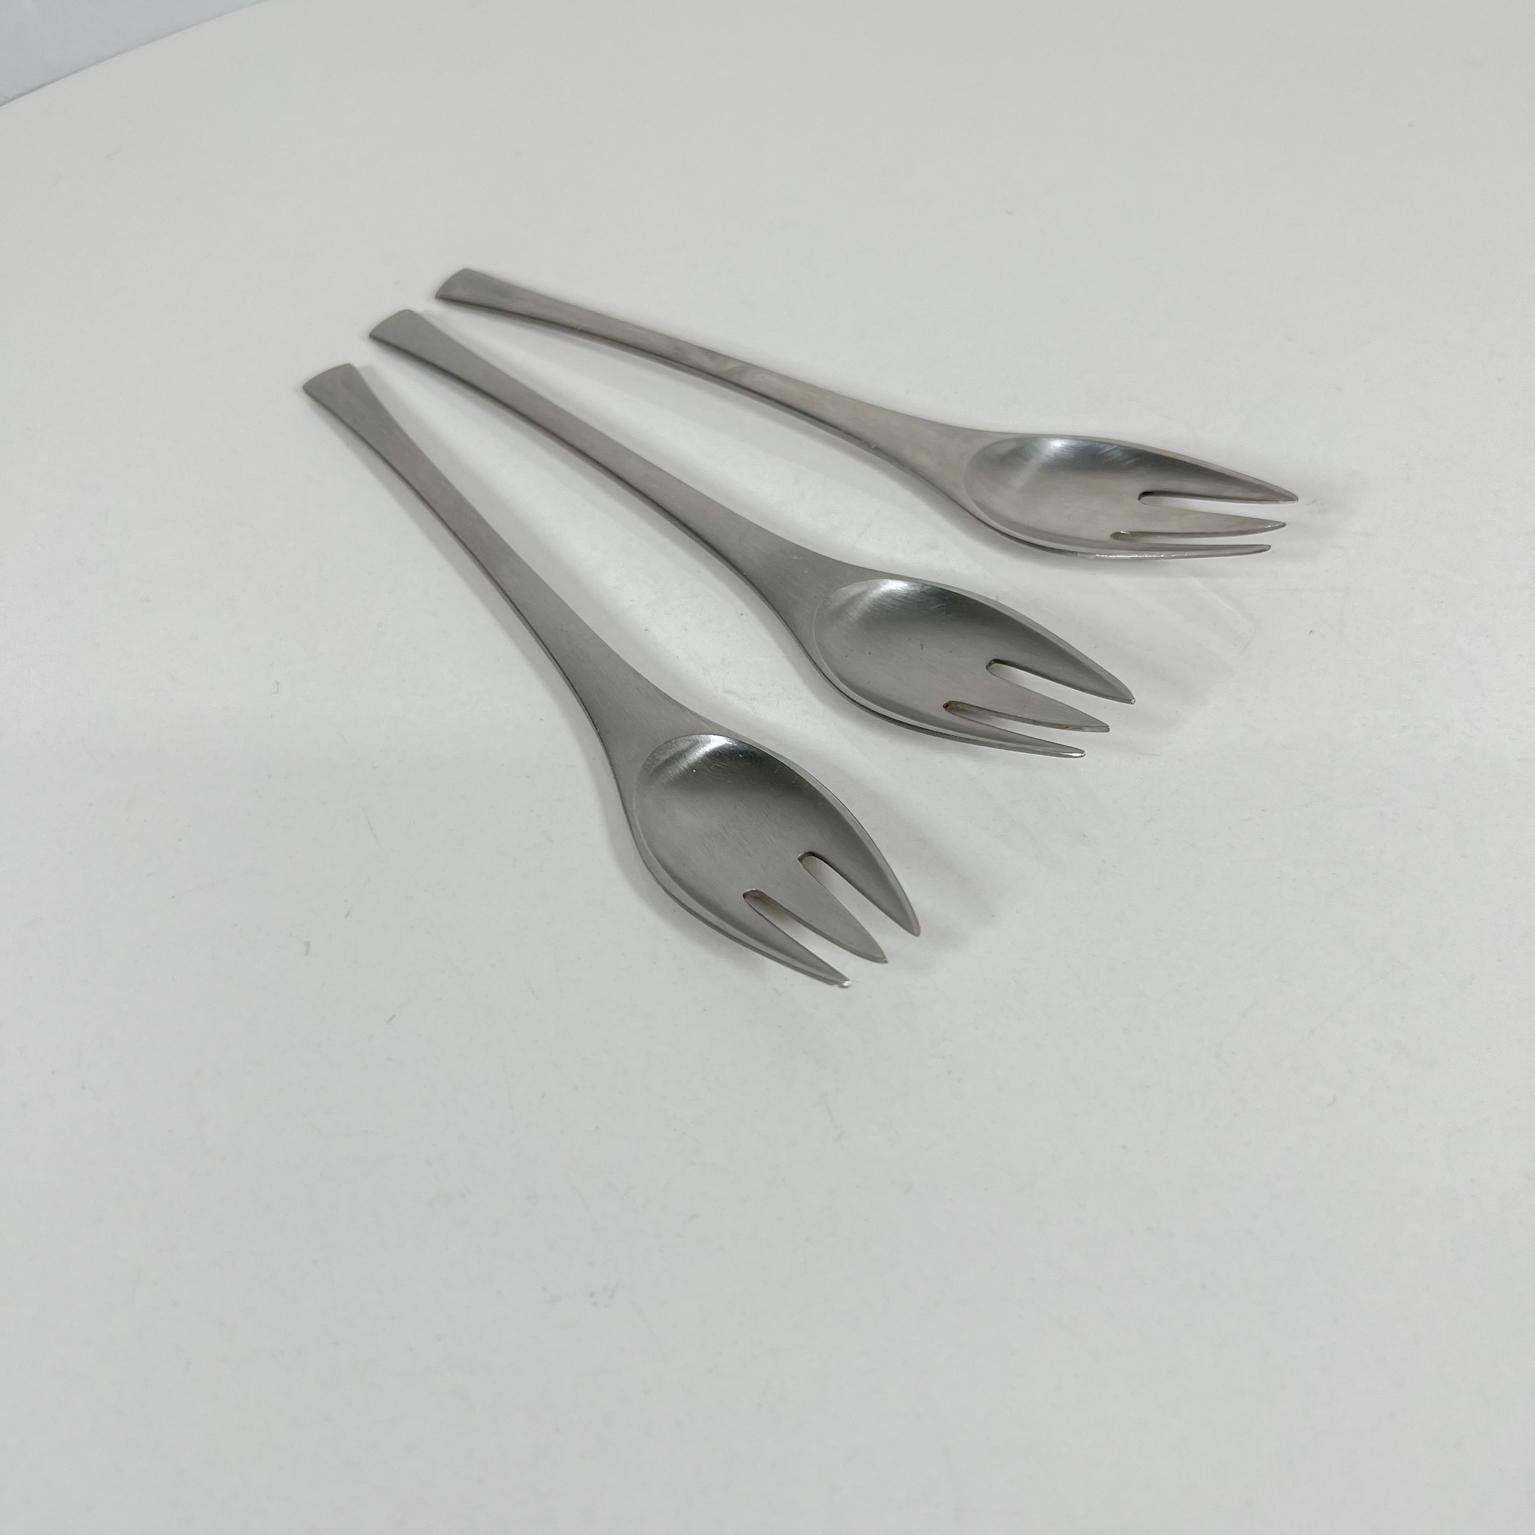 1950s Modern Dansk Set of 3 Small Forks Odin IHQ Jens Quistgaard Germany 1